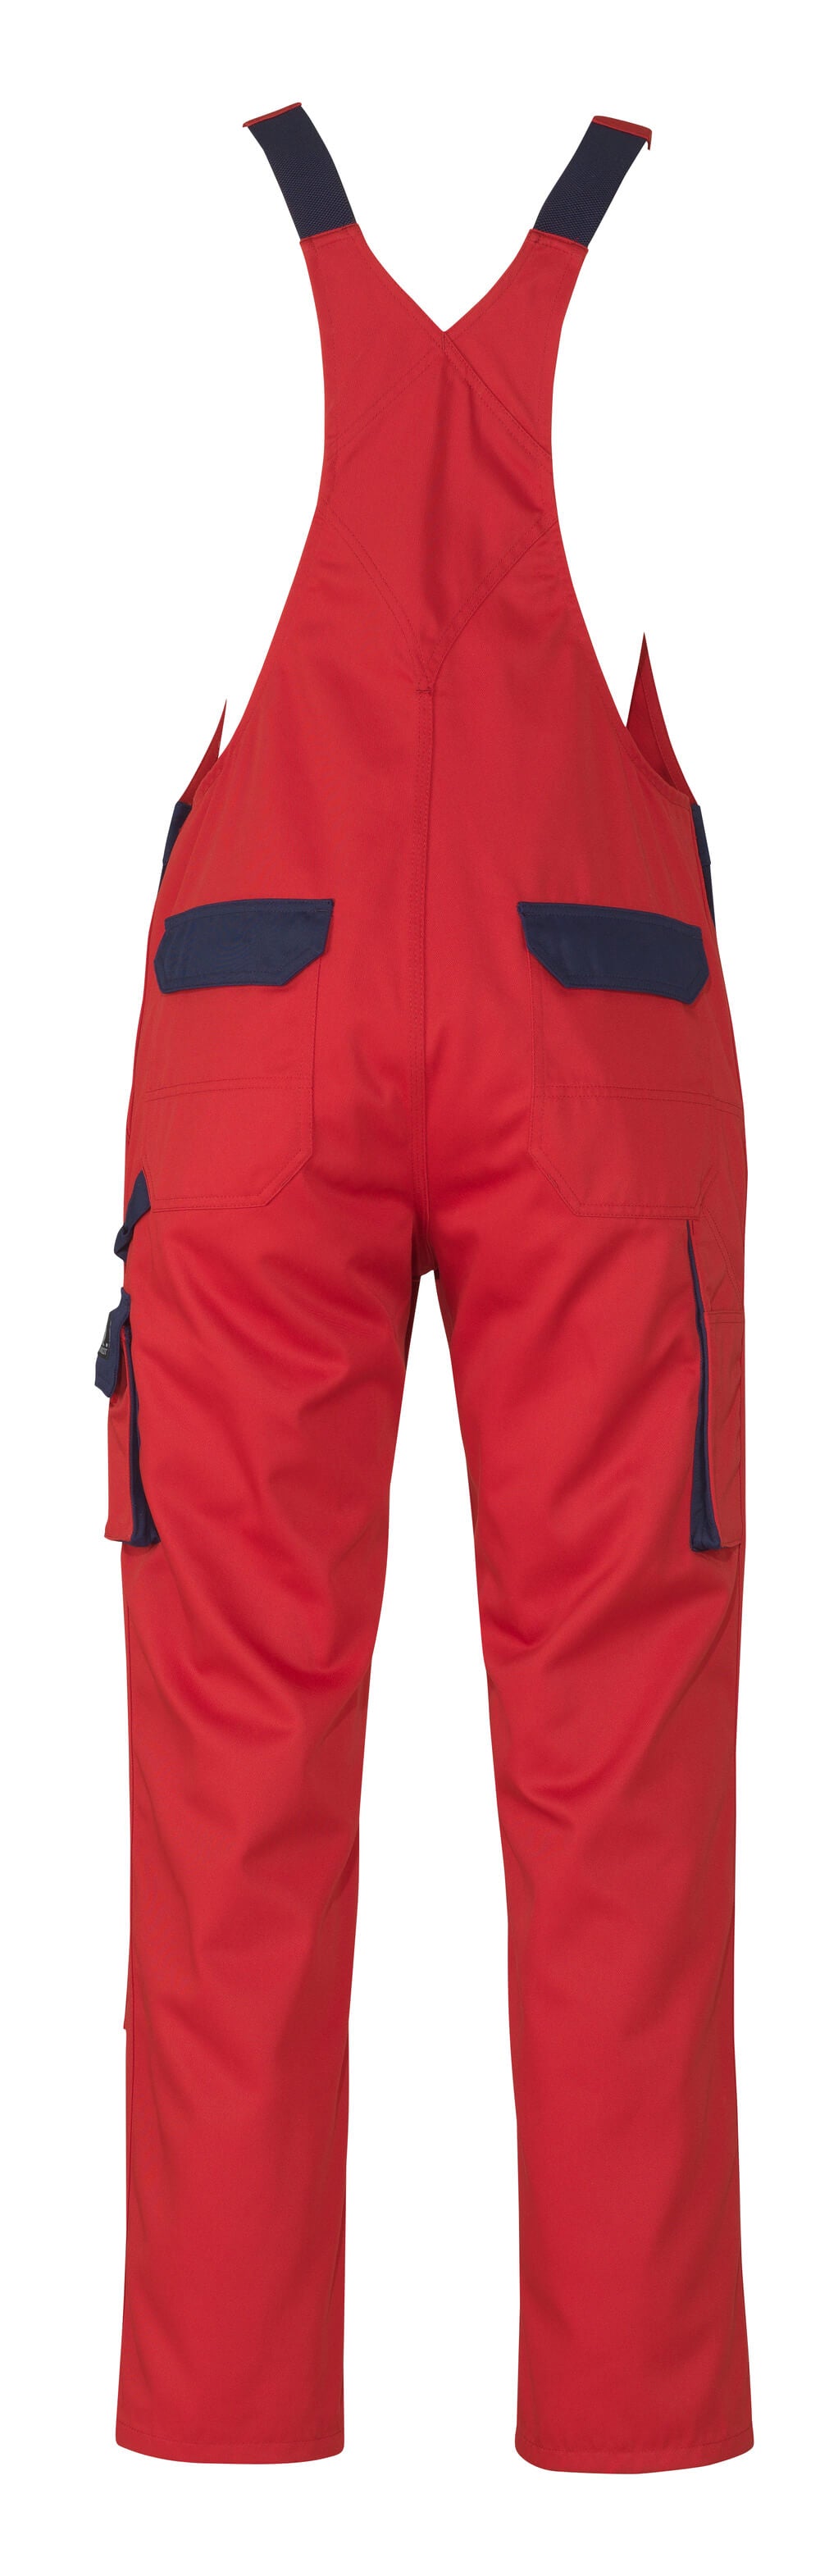 Mascot IMAGE  Milano Bib & Brace with kneepad pockets 00969 red/navy